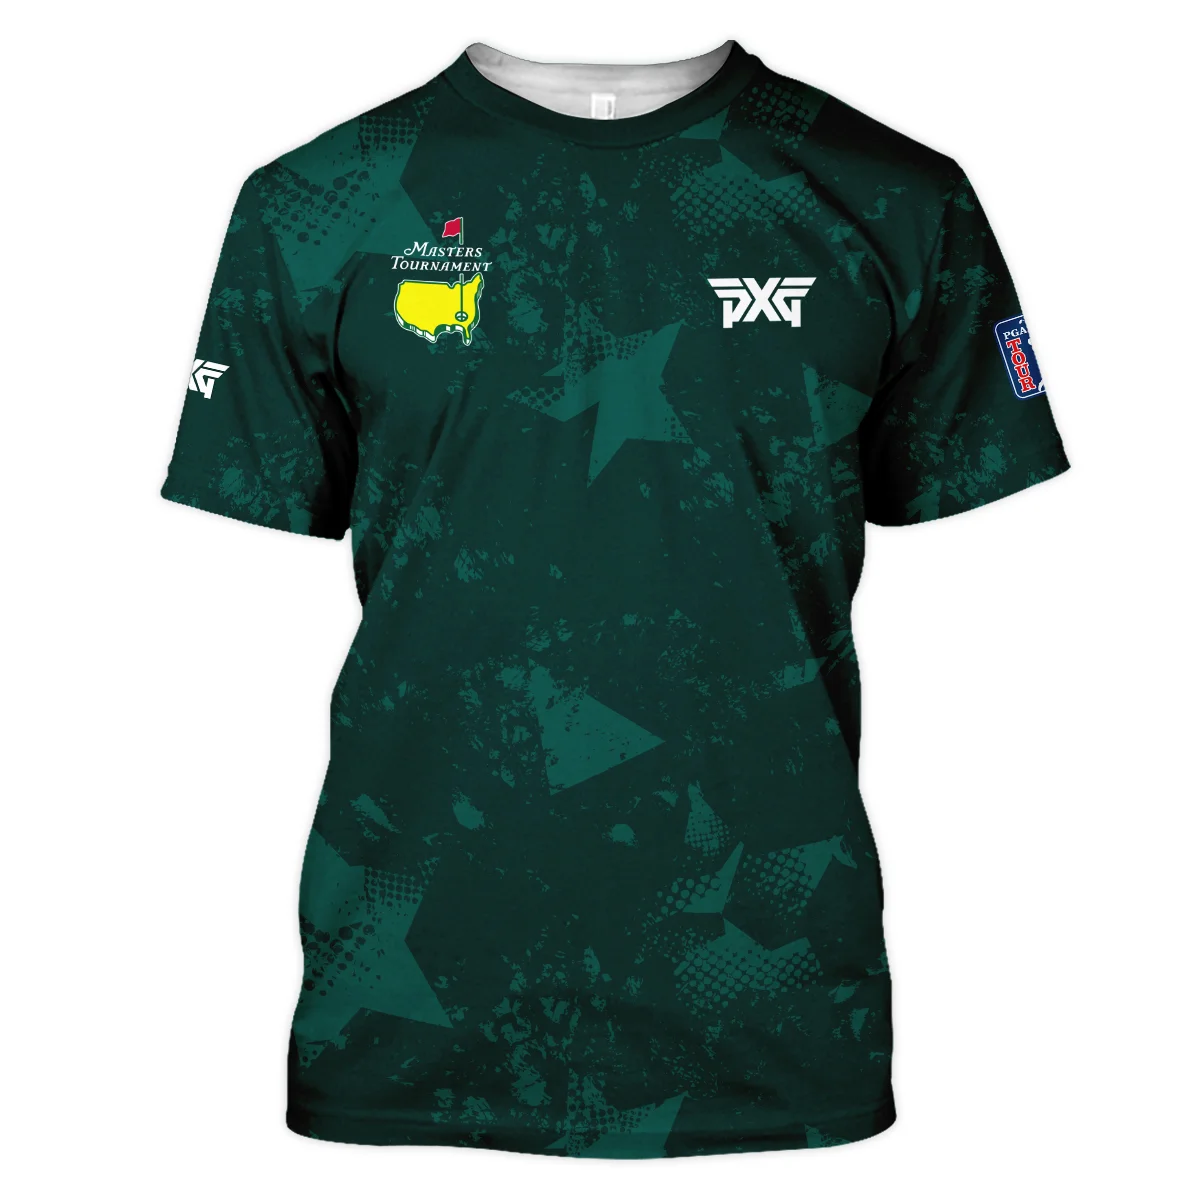 Dark Green Grunge Stars Pattern Golf Masters Tournament Unisex T-Shirt Style Classic T-Shirt